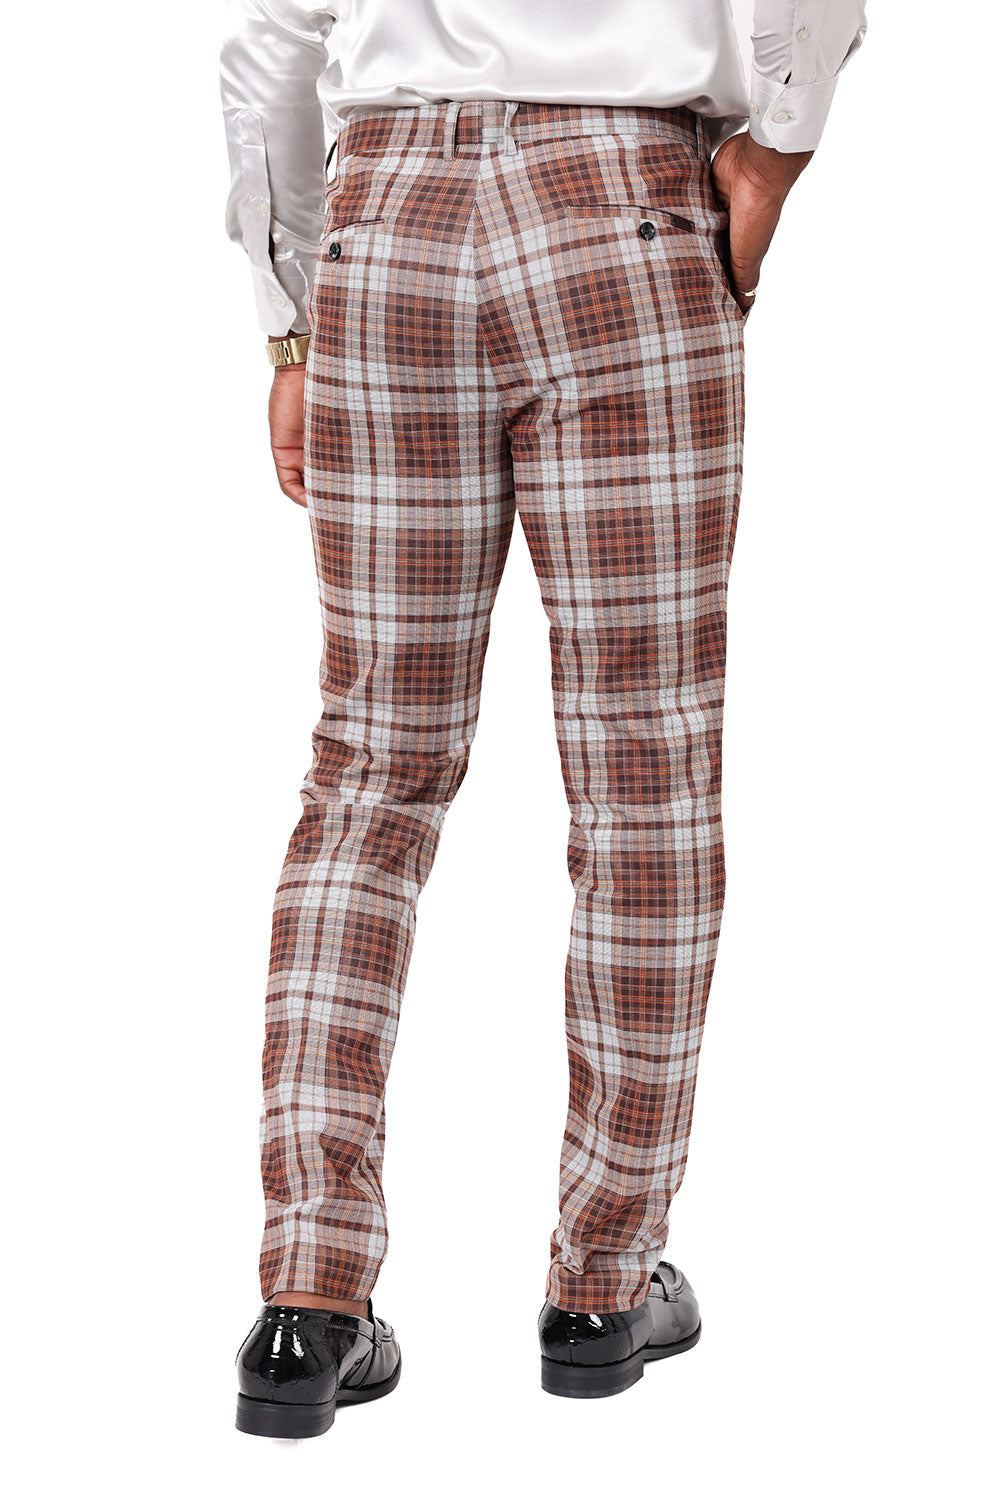 Barabas Men's Checkered Plaid Basic Chino Dress Pants 2CP191 Brown Rust